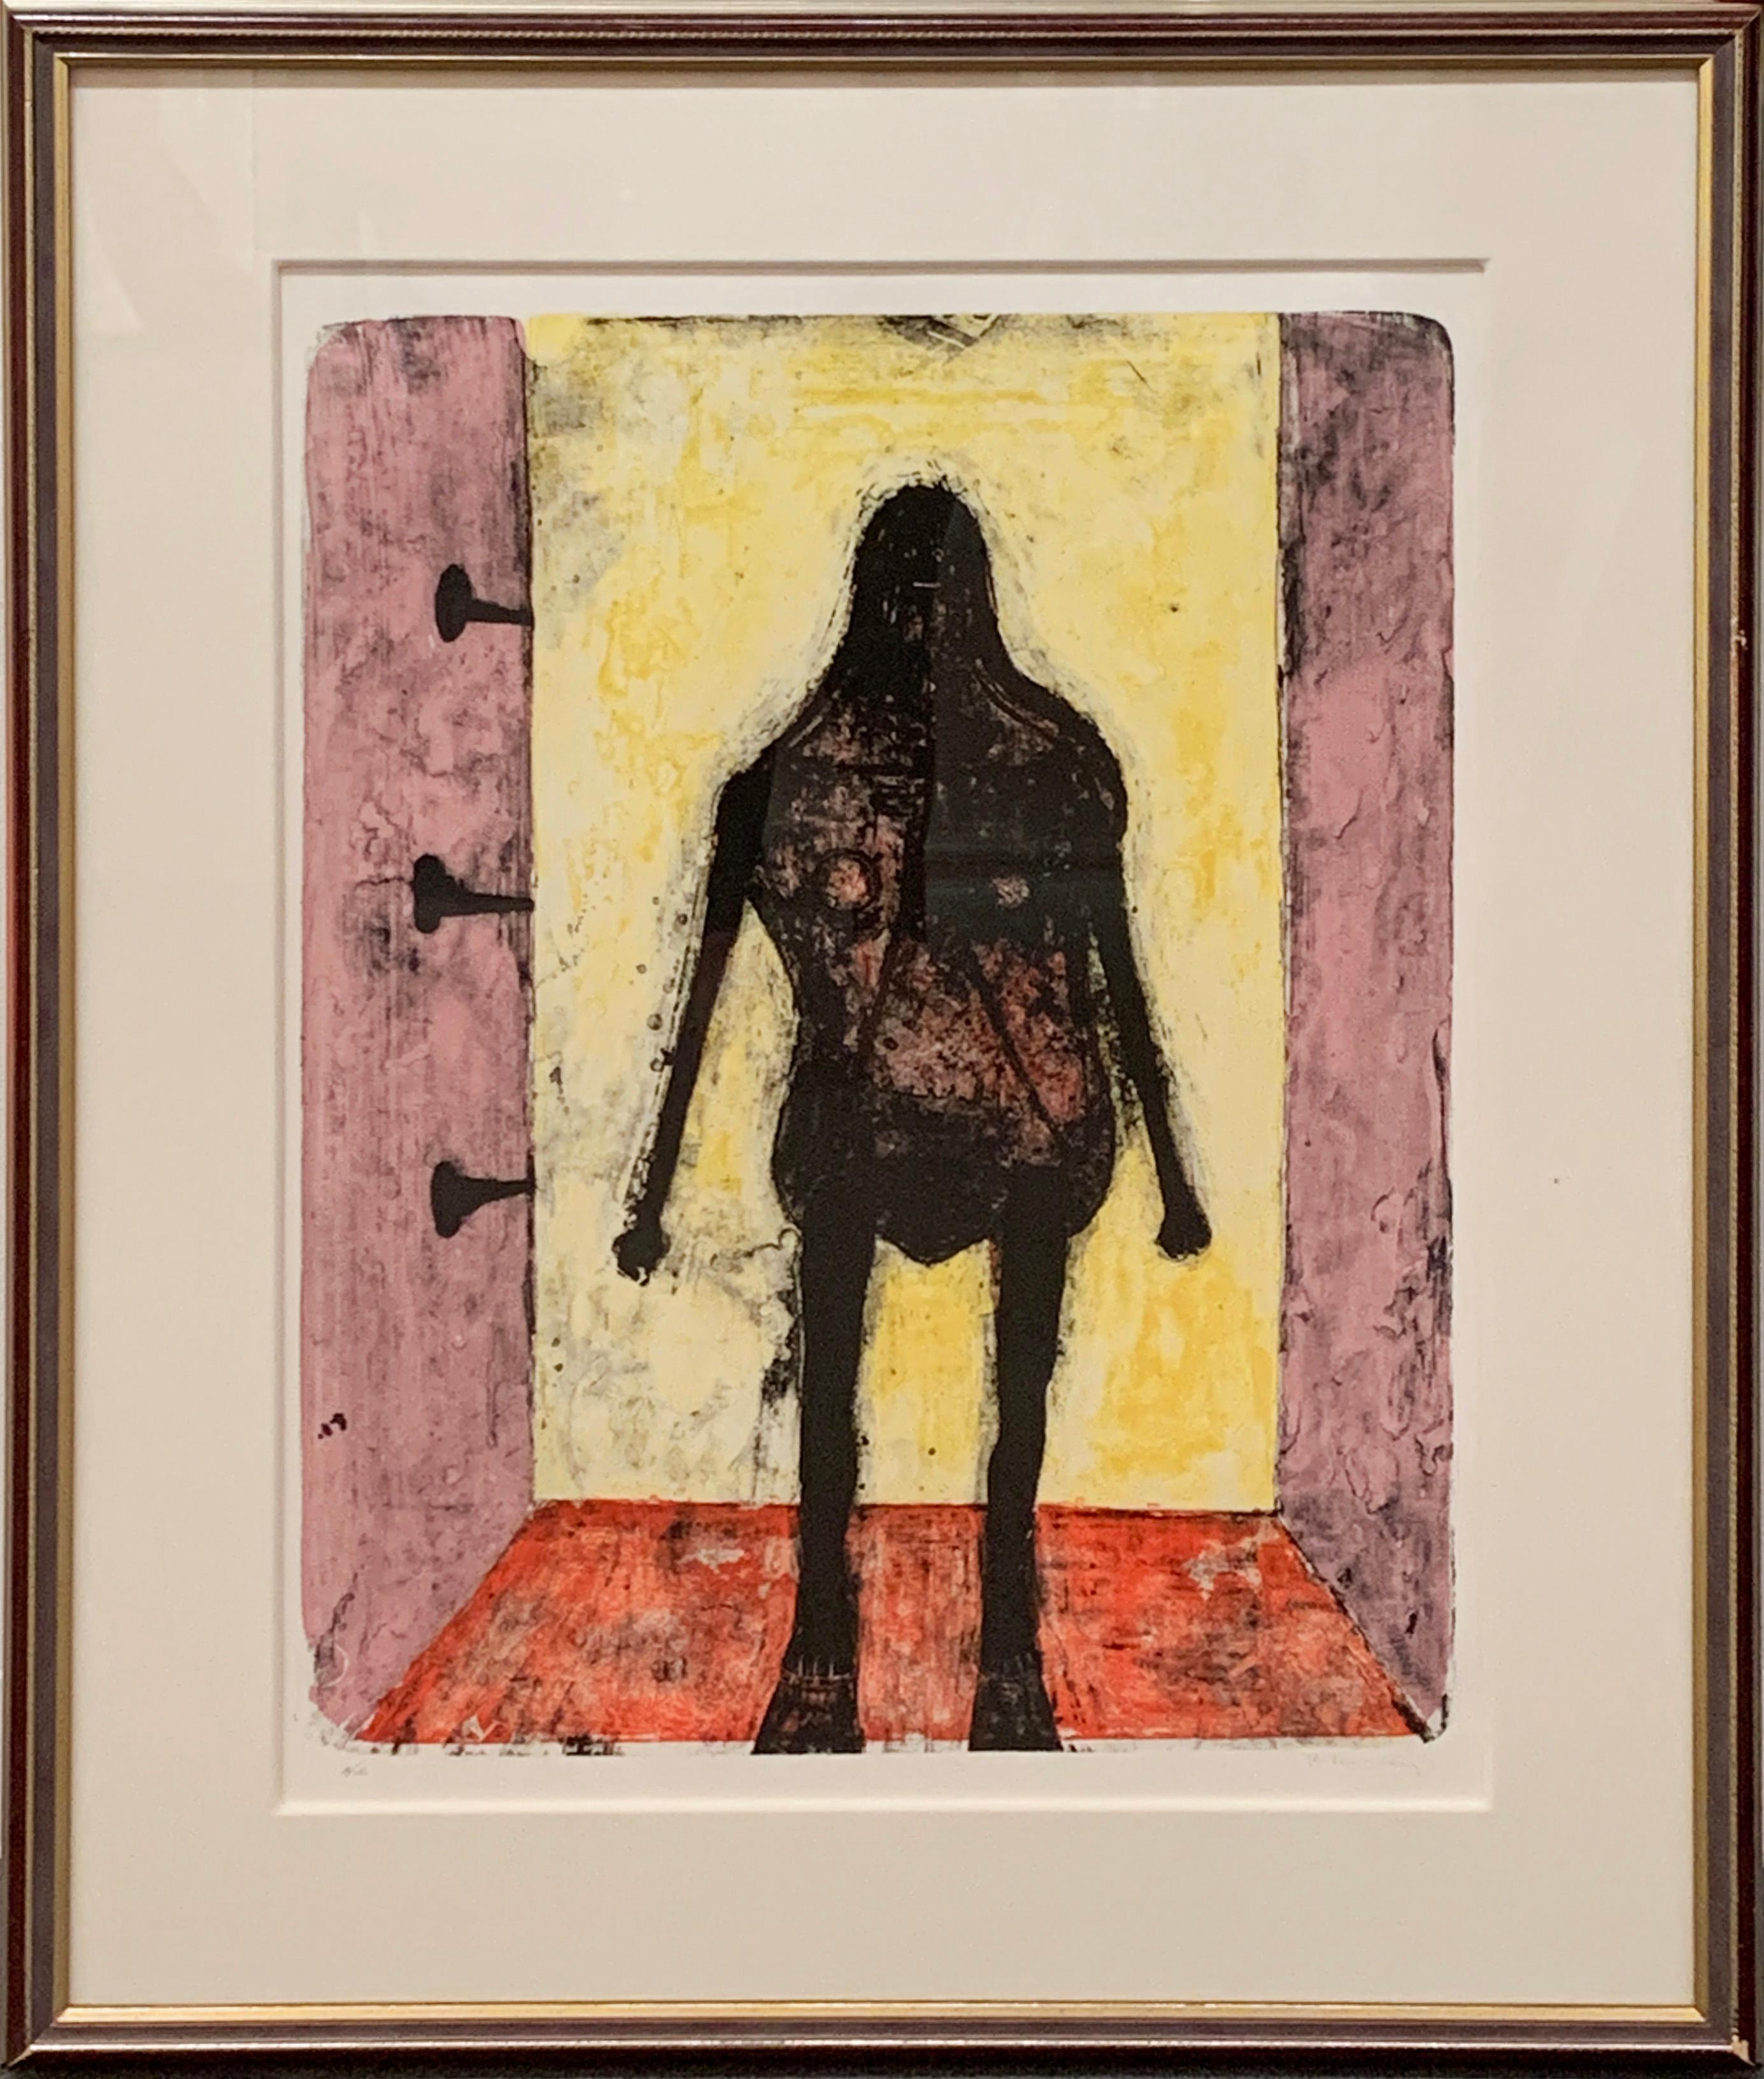 « Venus Noire », Rufino Tamayo, Abstraction figurative, eau-forte, 76,2 x 55,9 cm. en vente 1